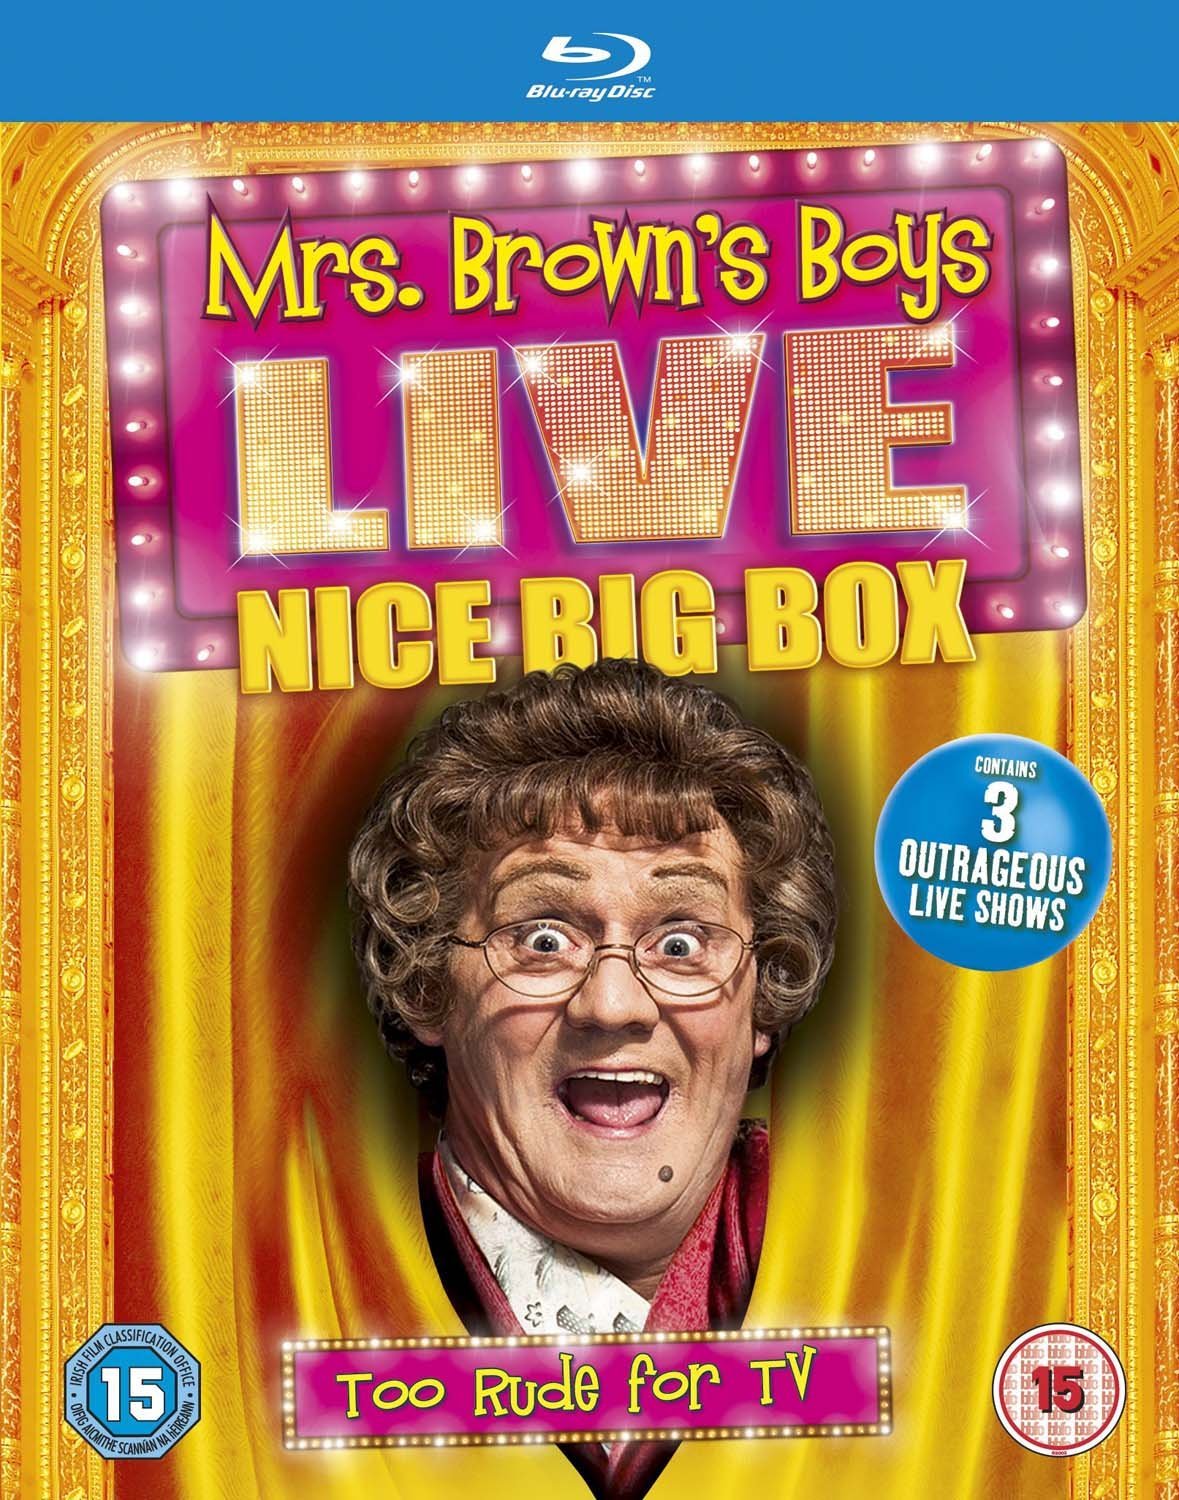 Mrs. Brown's Boys Live - Nice Big Box [Blu-ray]